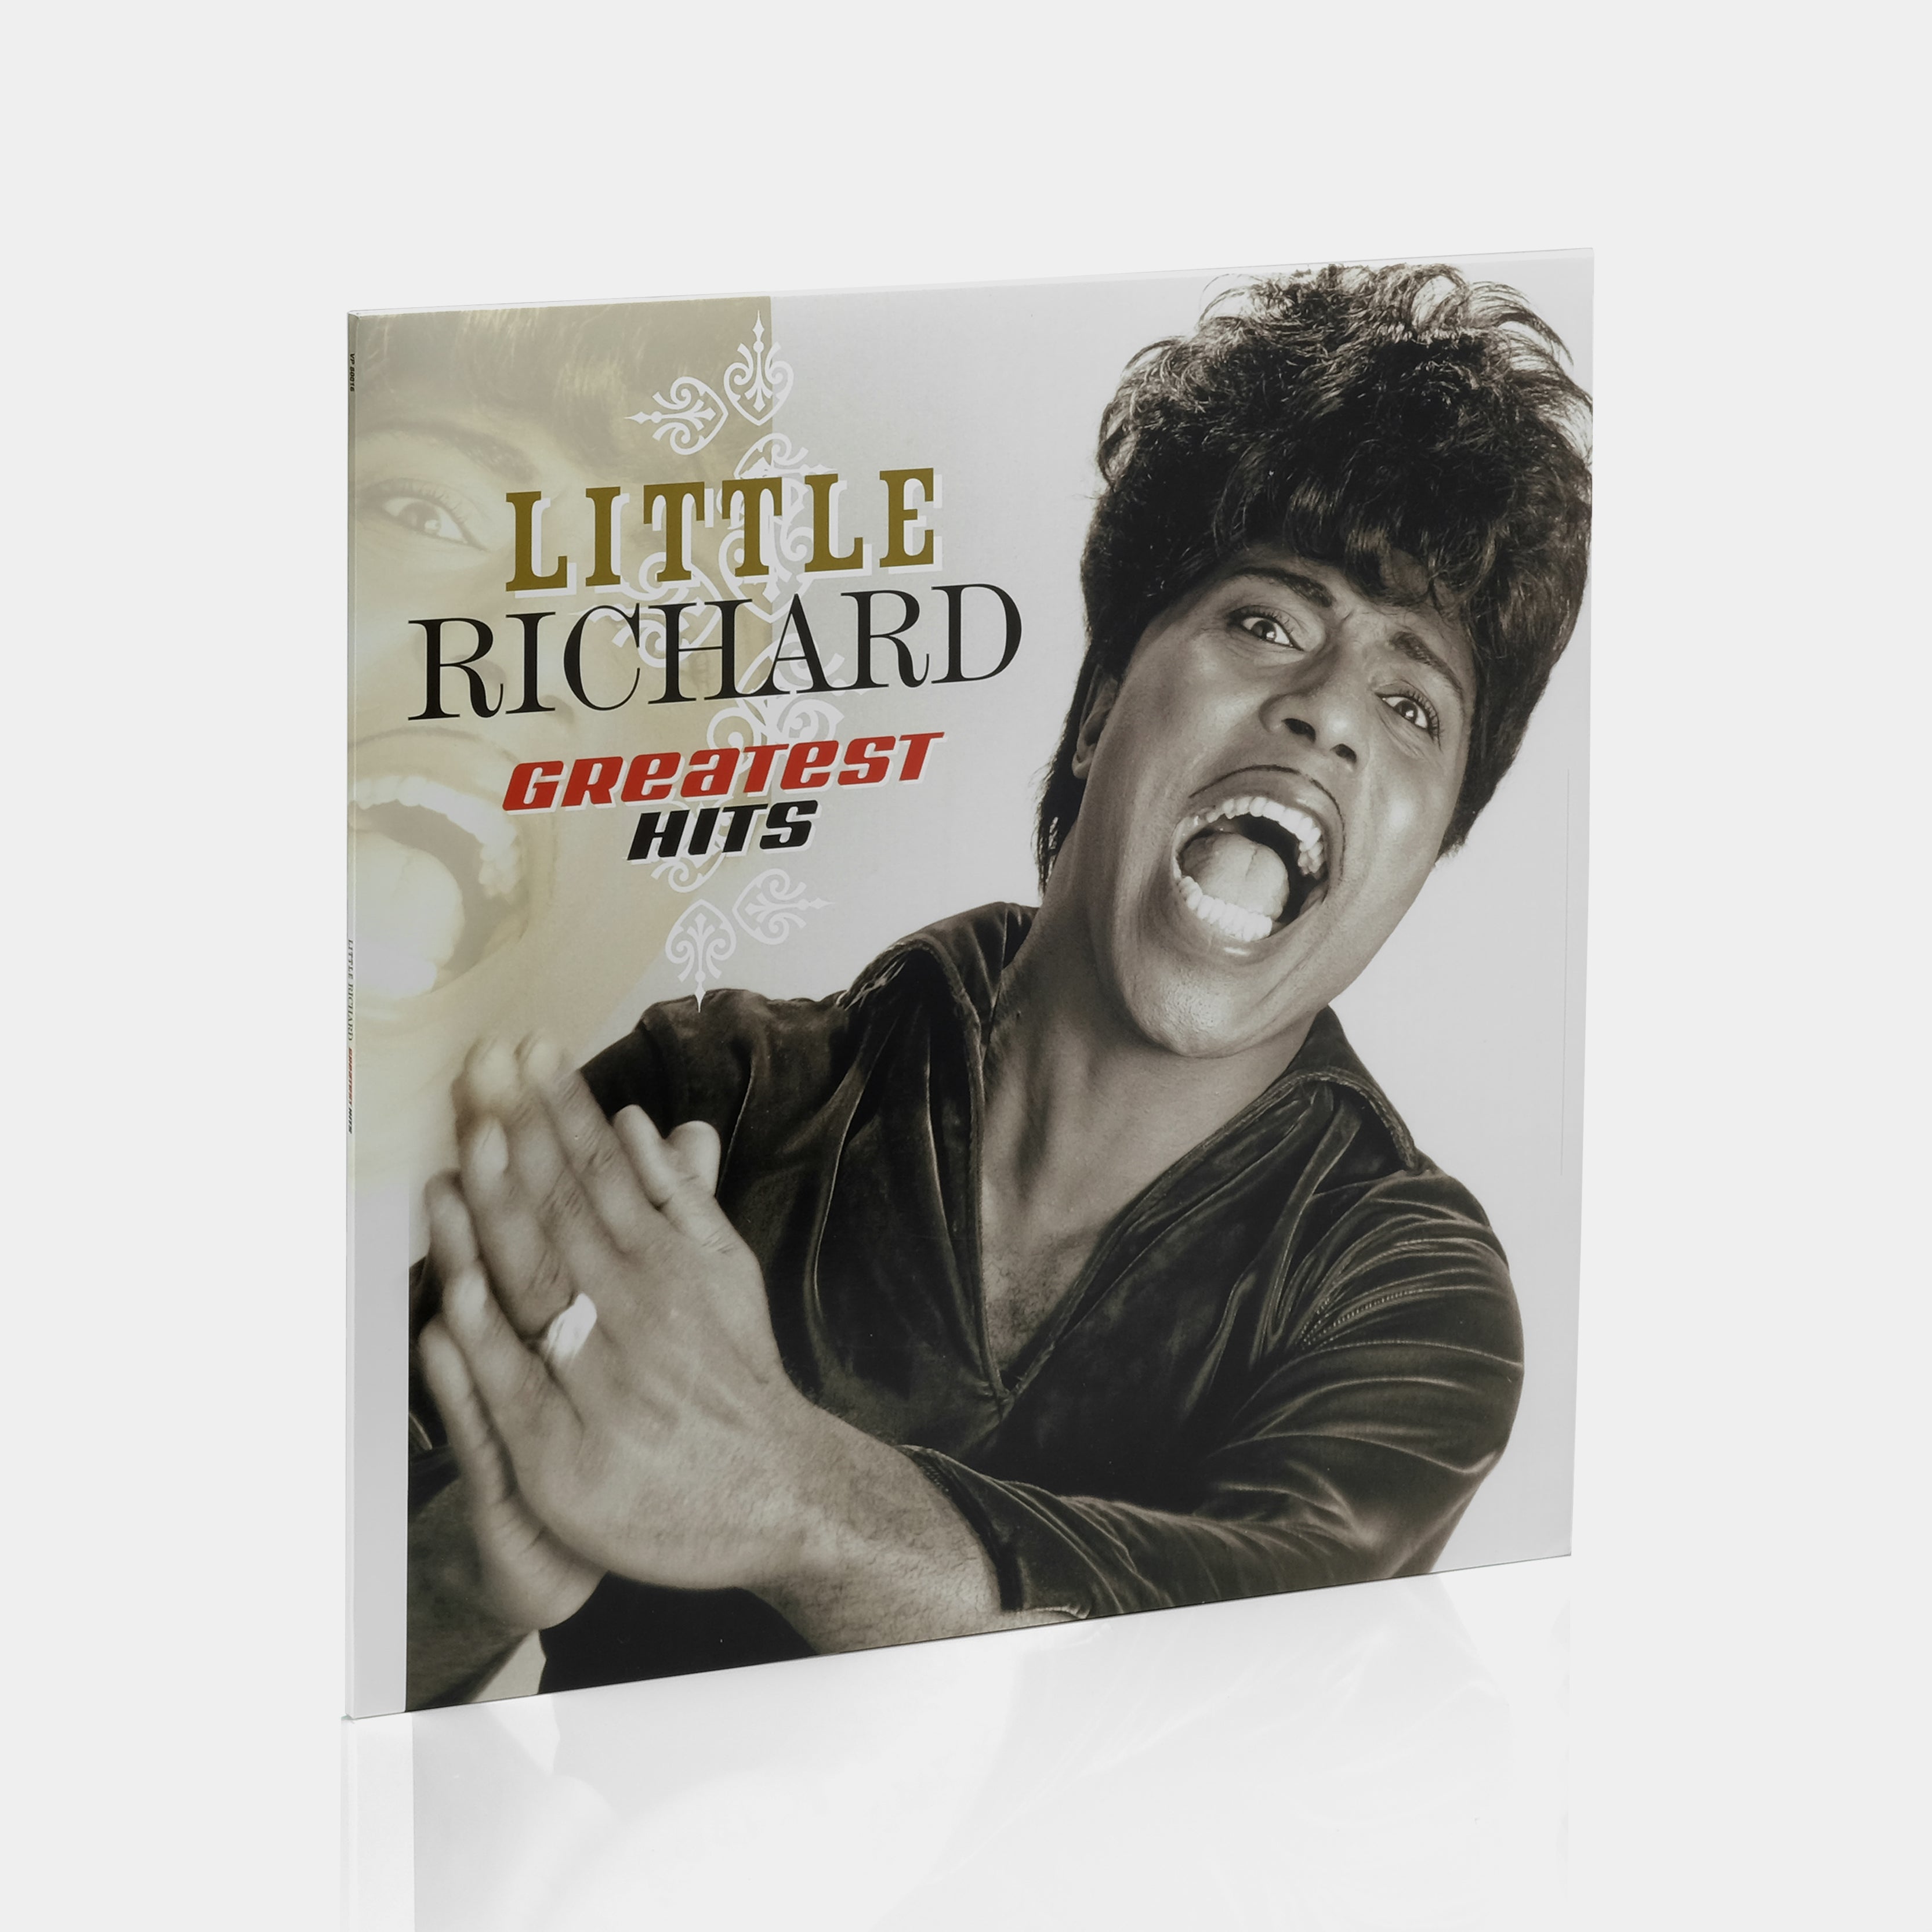 Little Richard - Greatest Hits LP Vinyl Record